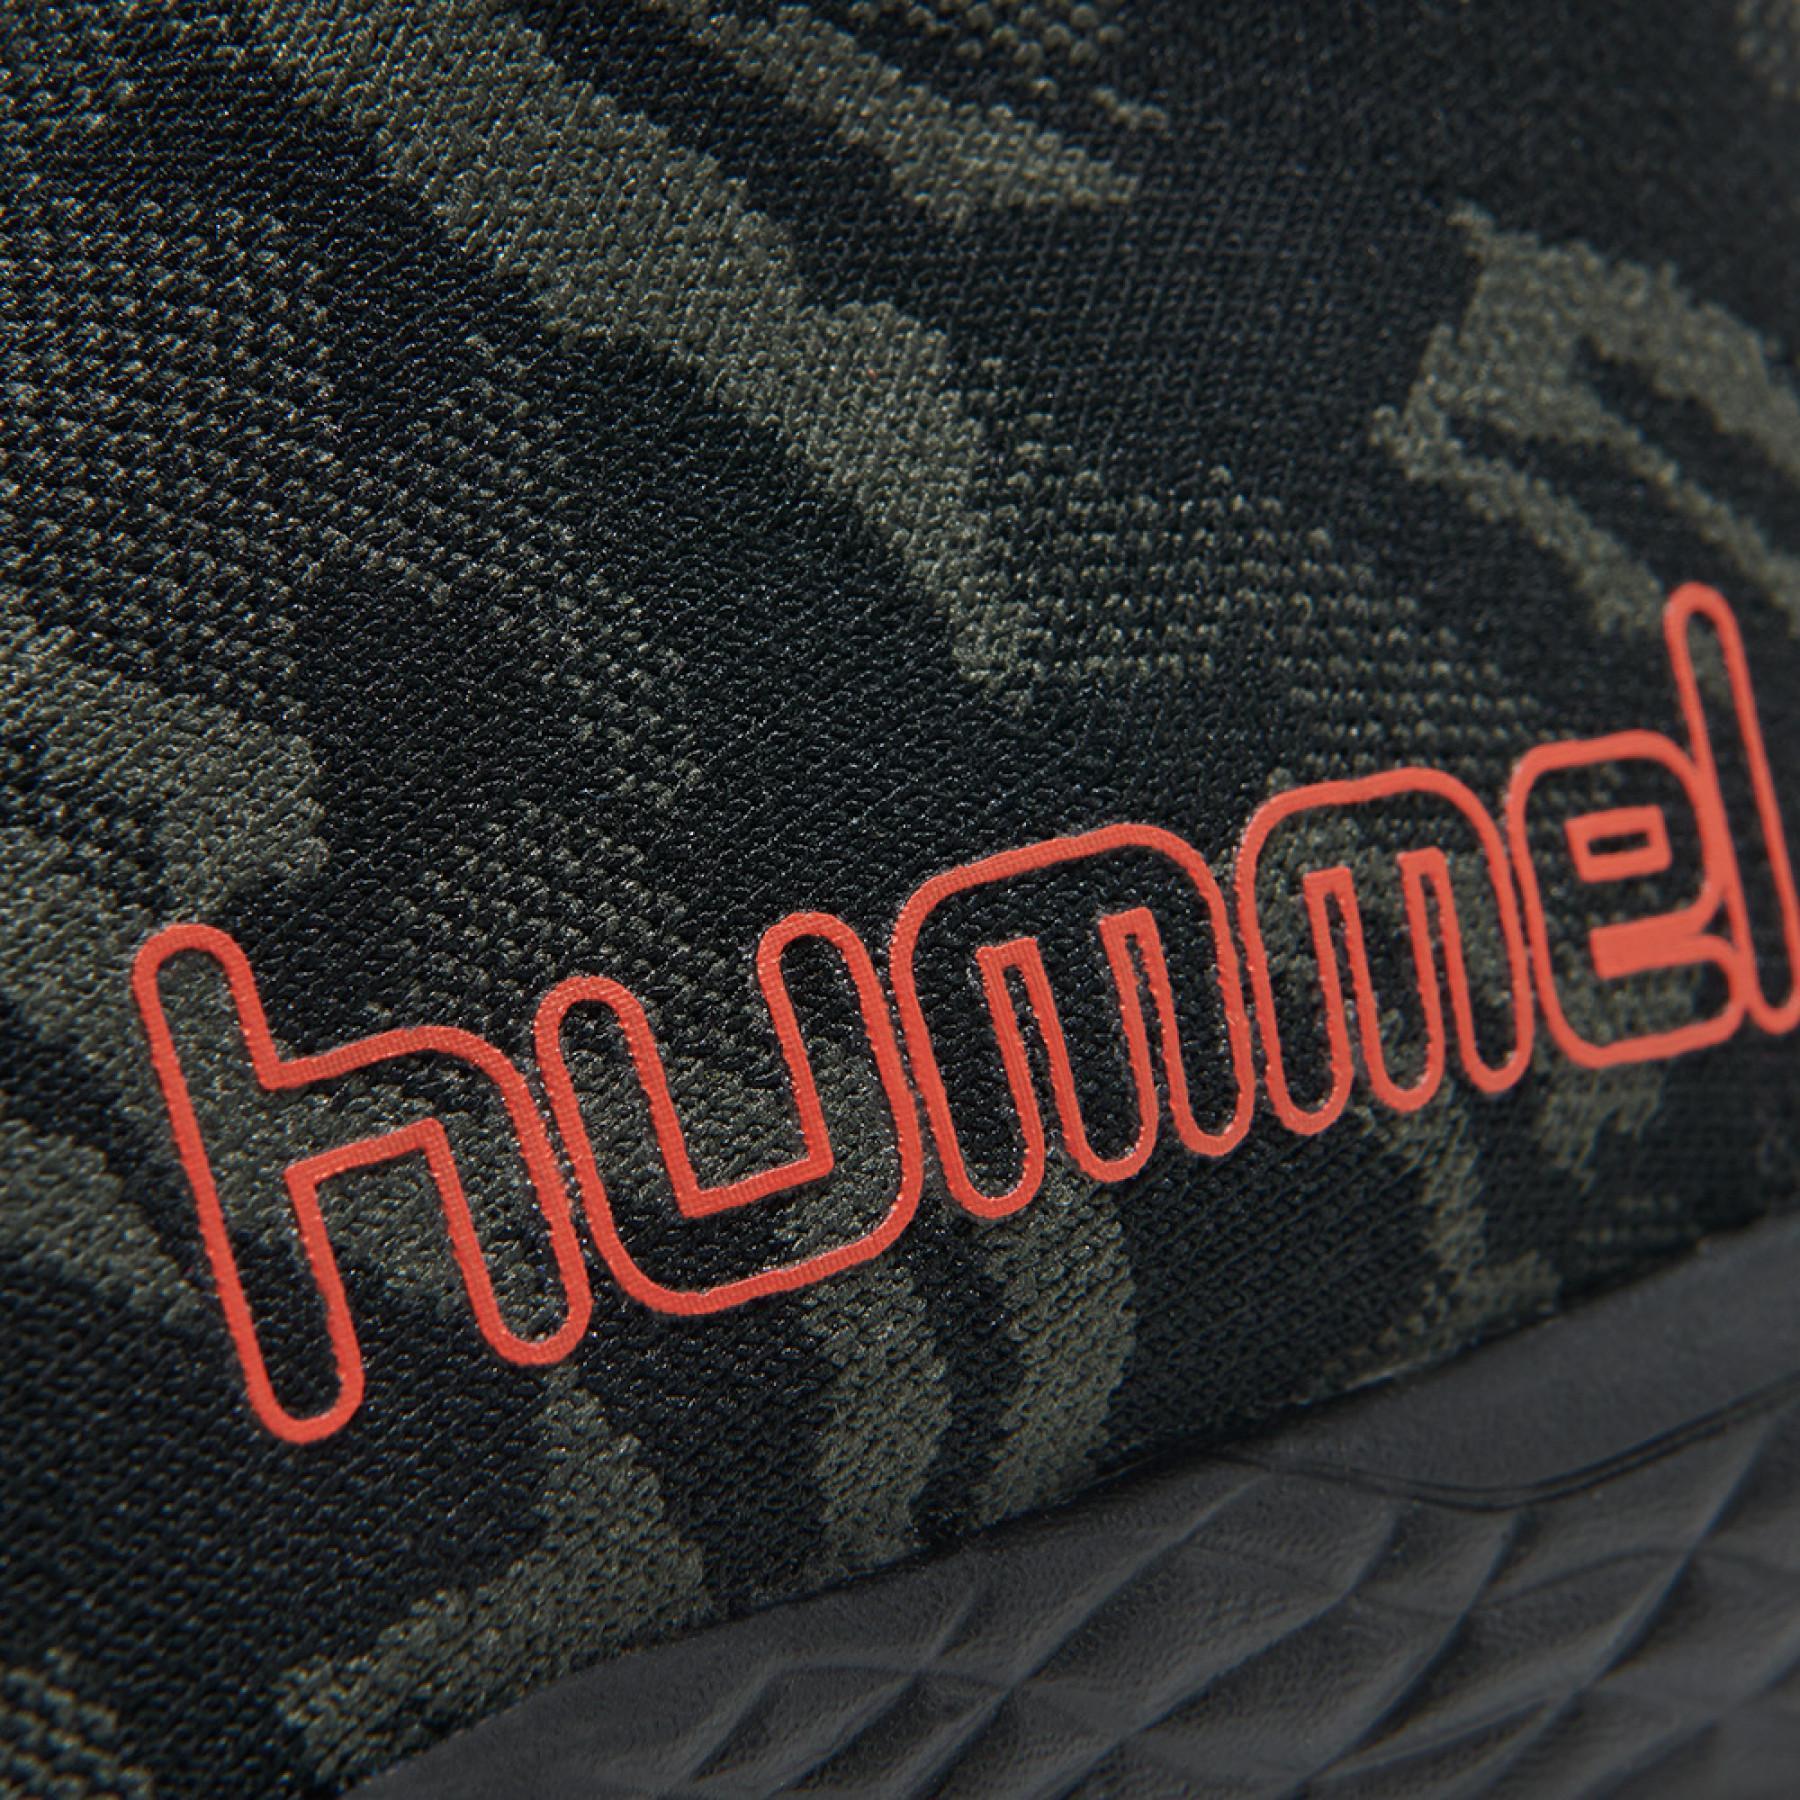 Children's sneakers Hummel terrafly sock runner camo